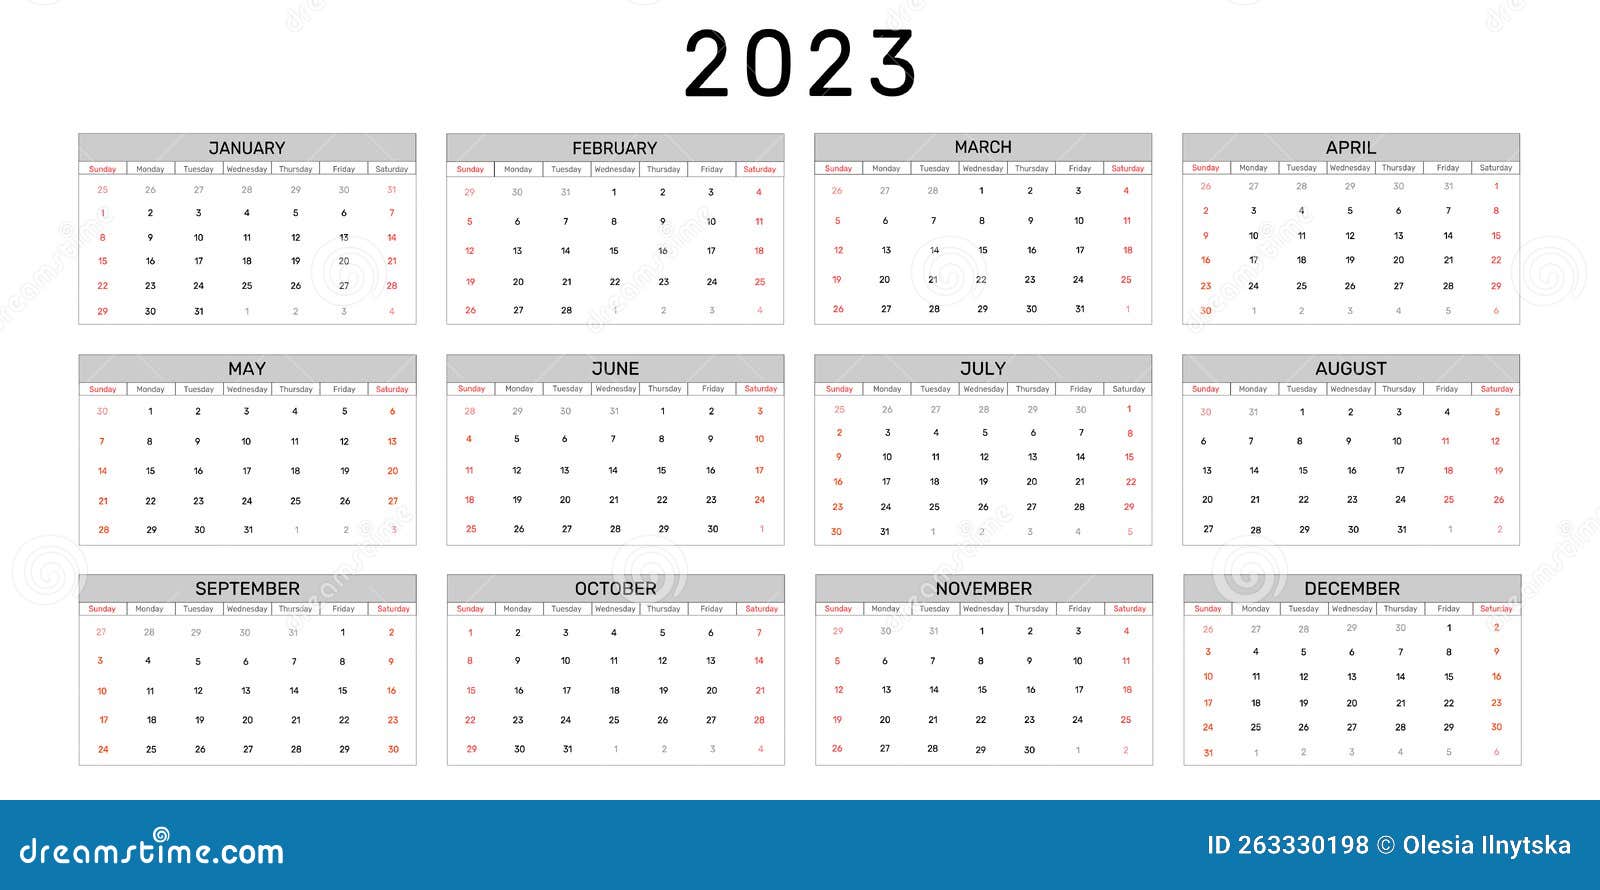 Calendar 2023 Year Vector Illustration Annual Calendar 2023 Template